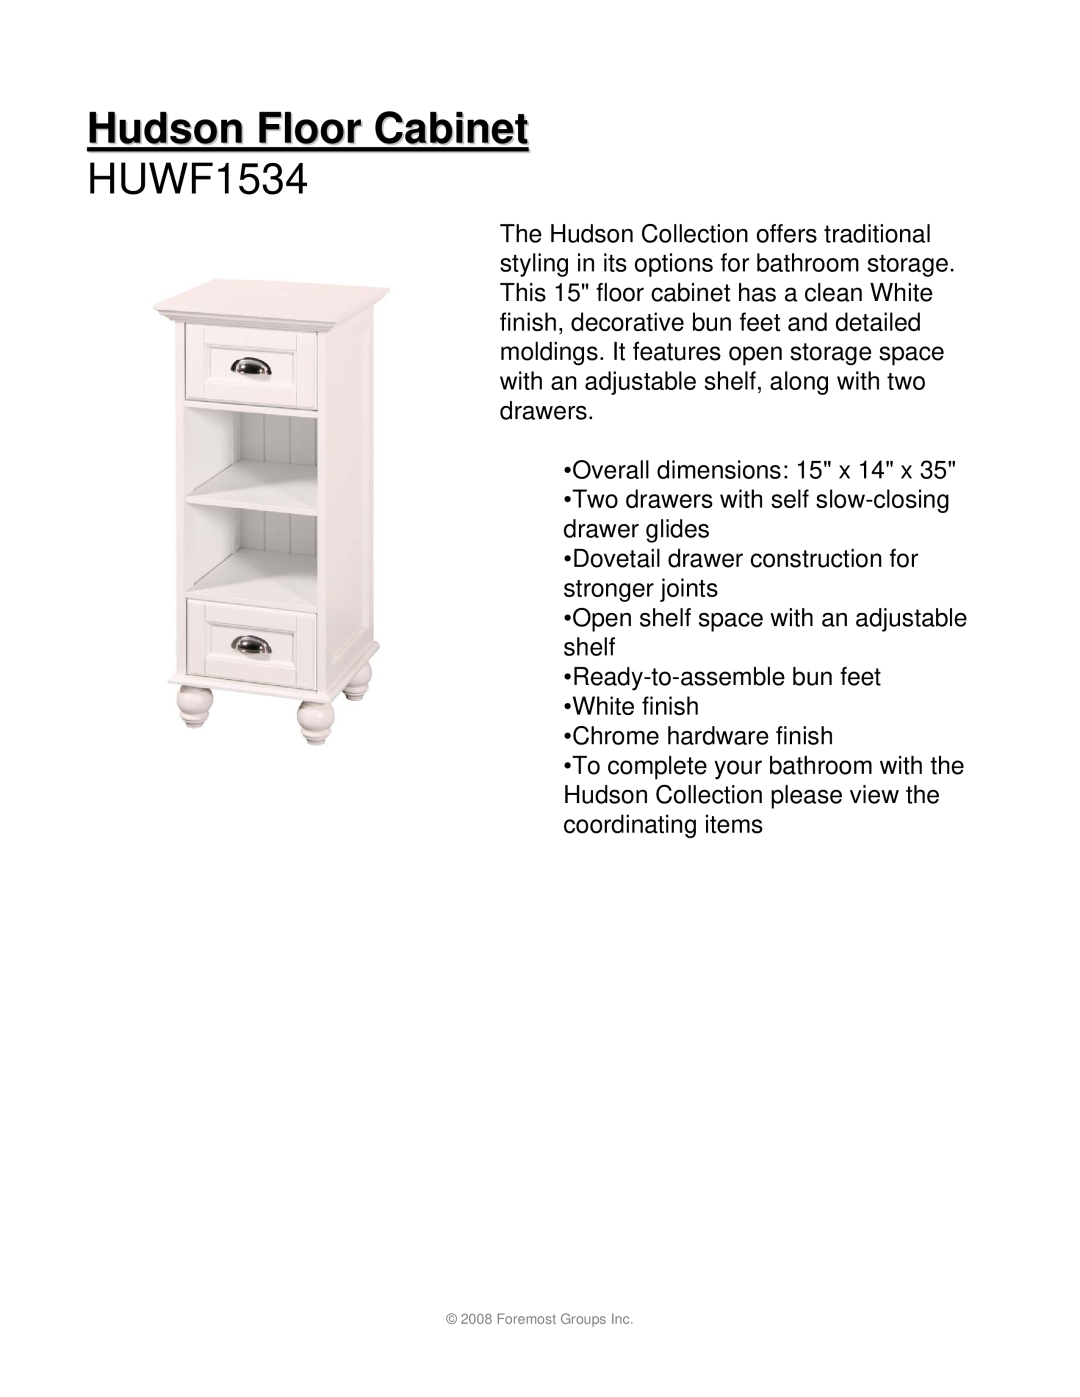 Hudson Sales & Engineering HUWT2066, HUWS2412, HUWW1828 dimensions Hudson Floor Cabinet, HUWF1534 